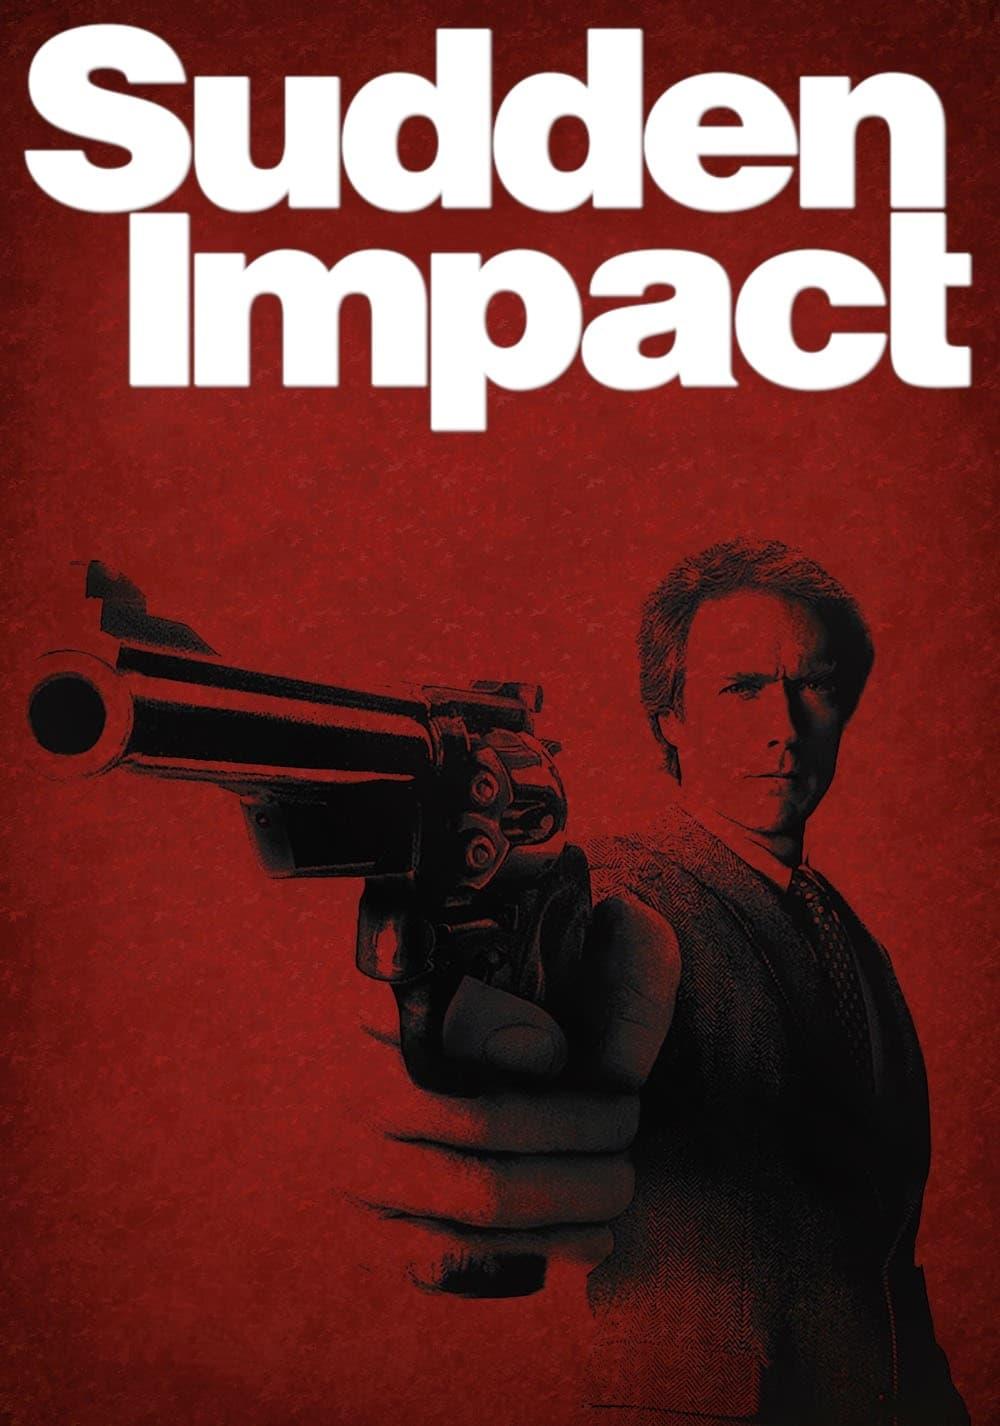 Sudden Impact poster